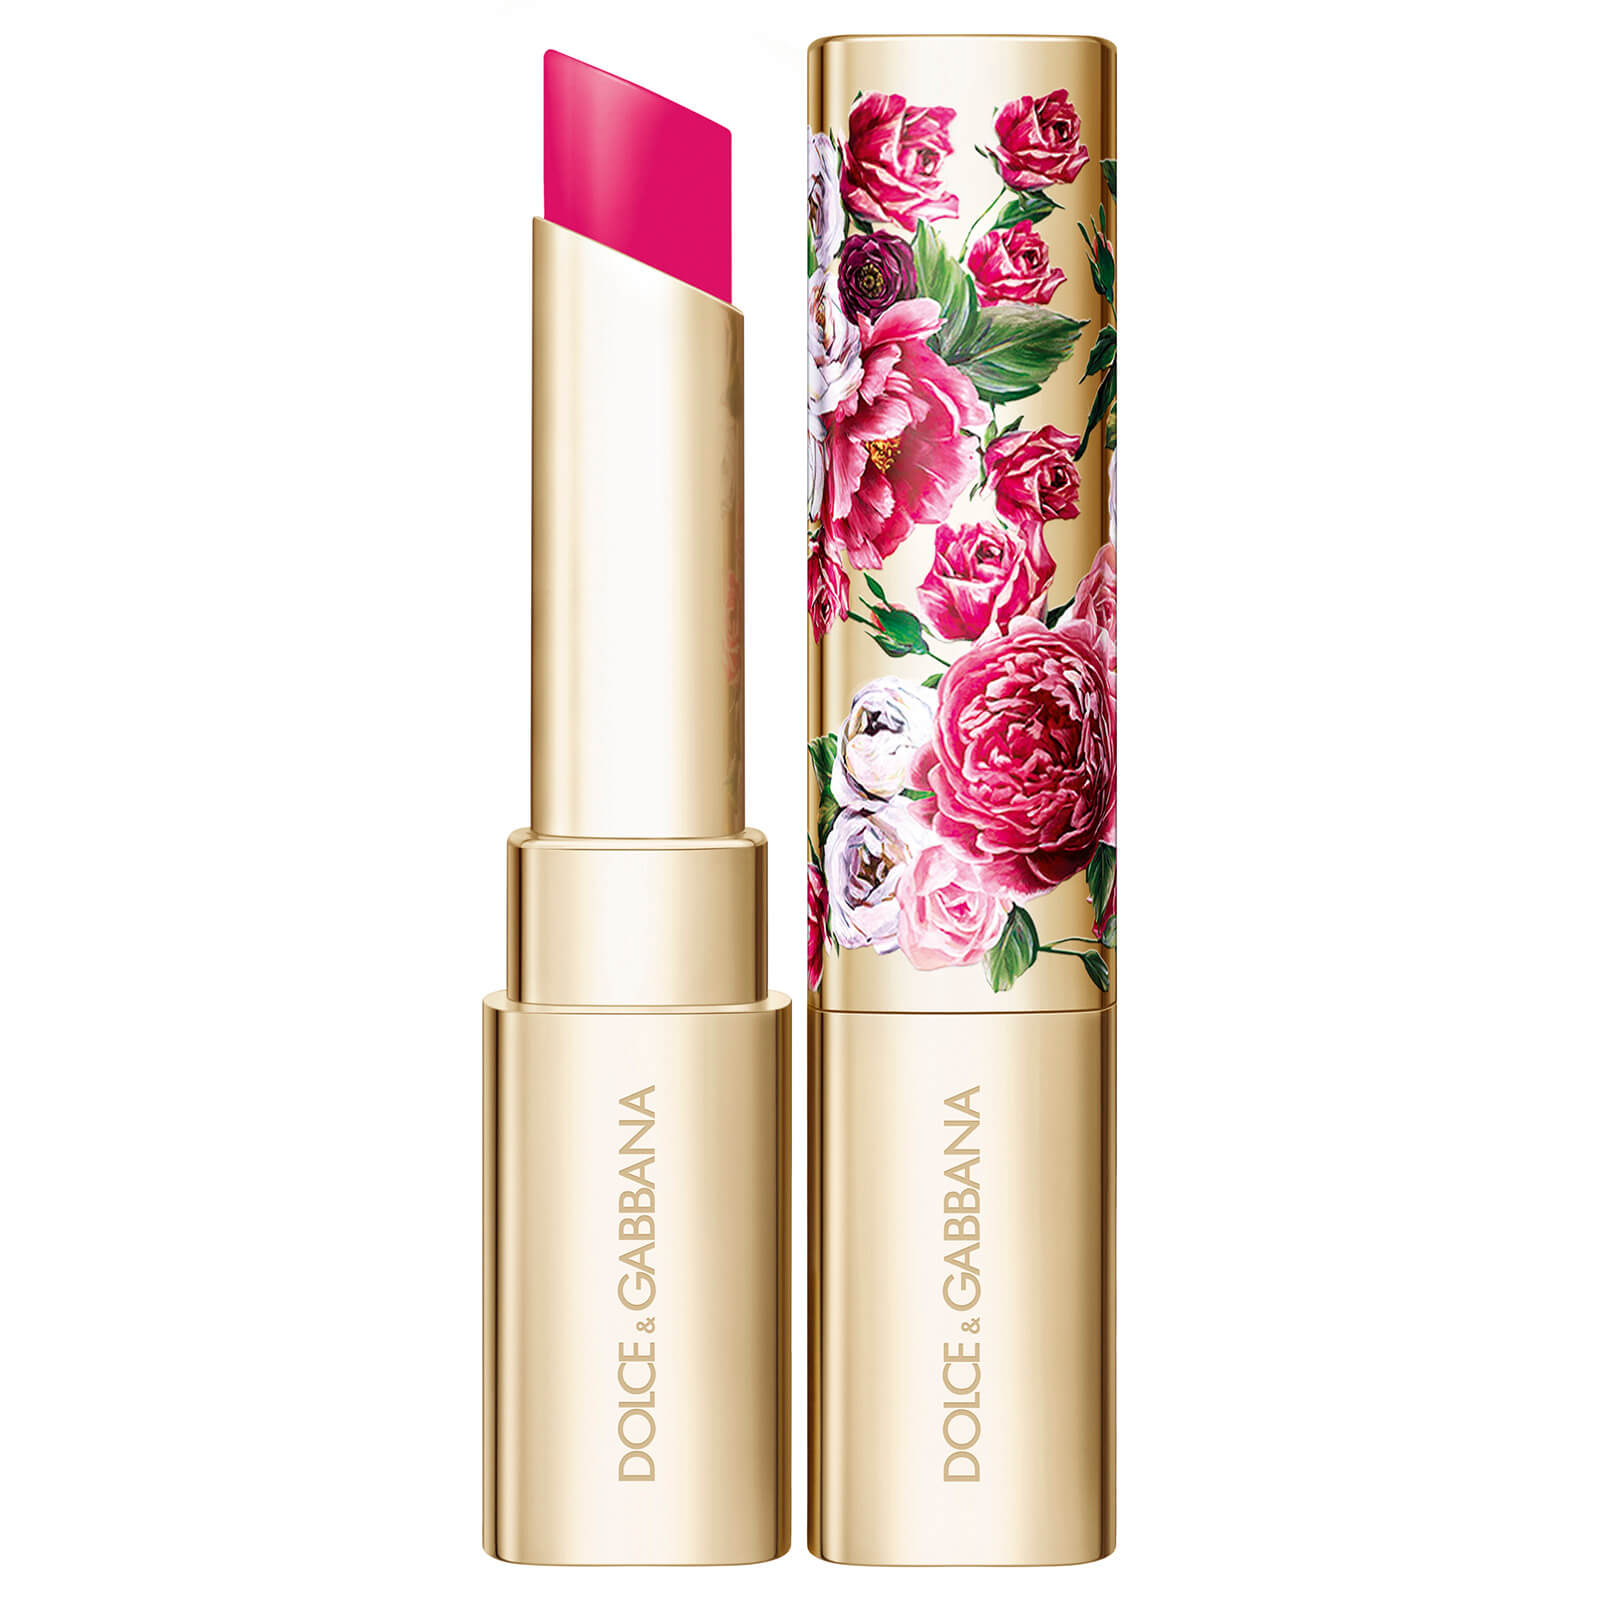 Dolce&Gabbana Sheerlips Lipsticks 3.5g (Various Shades) - 3 Spring Peony